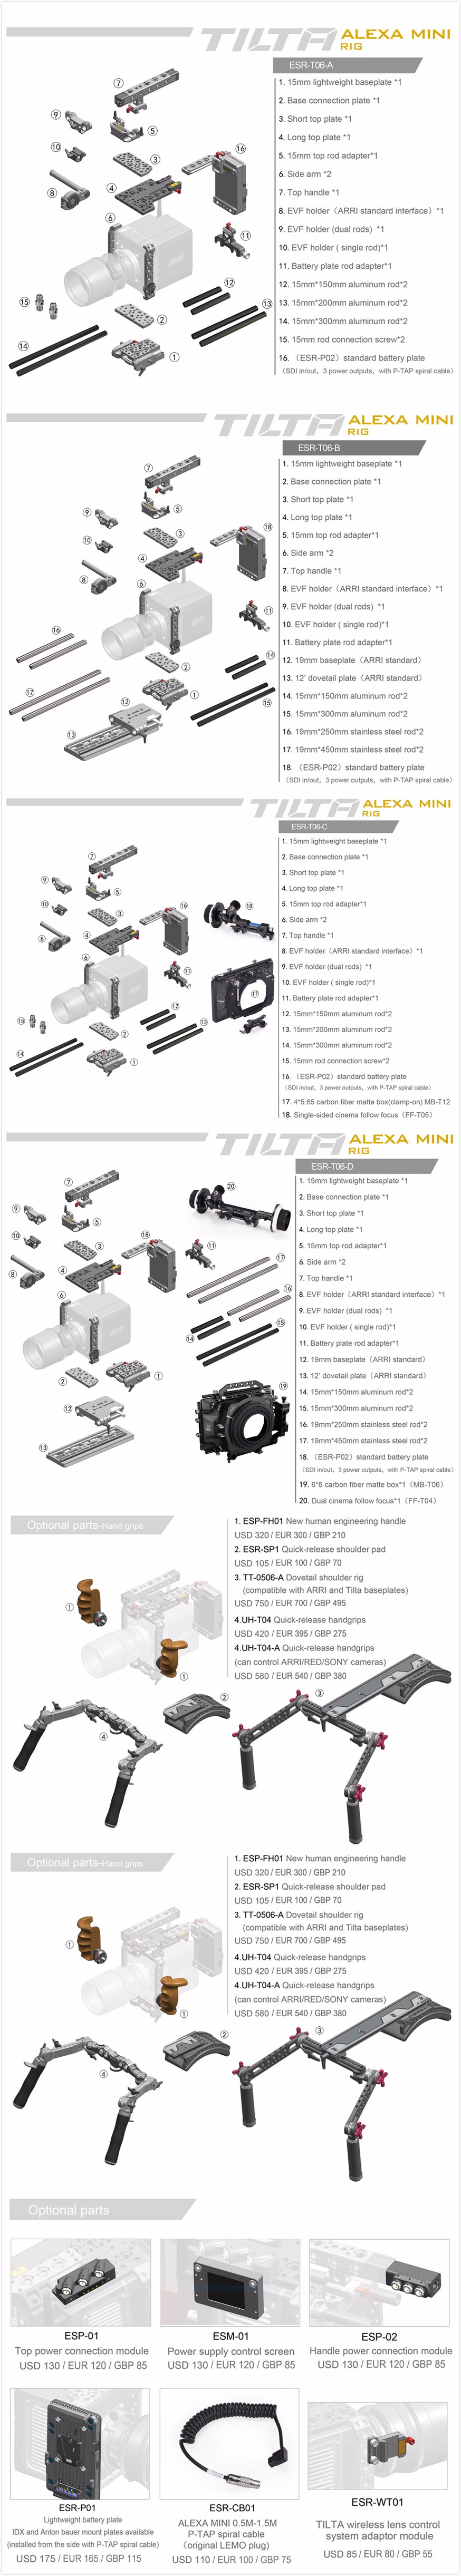 Alexa mini kit-2